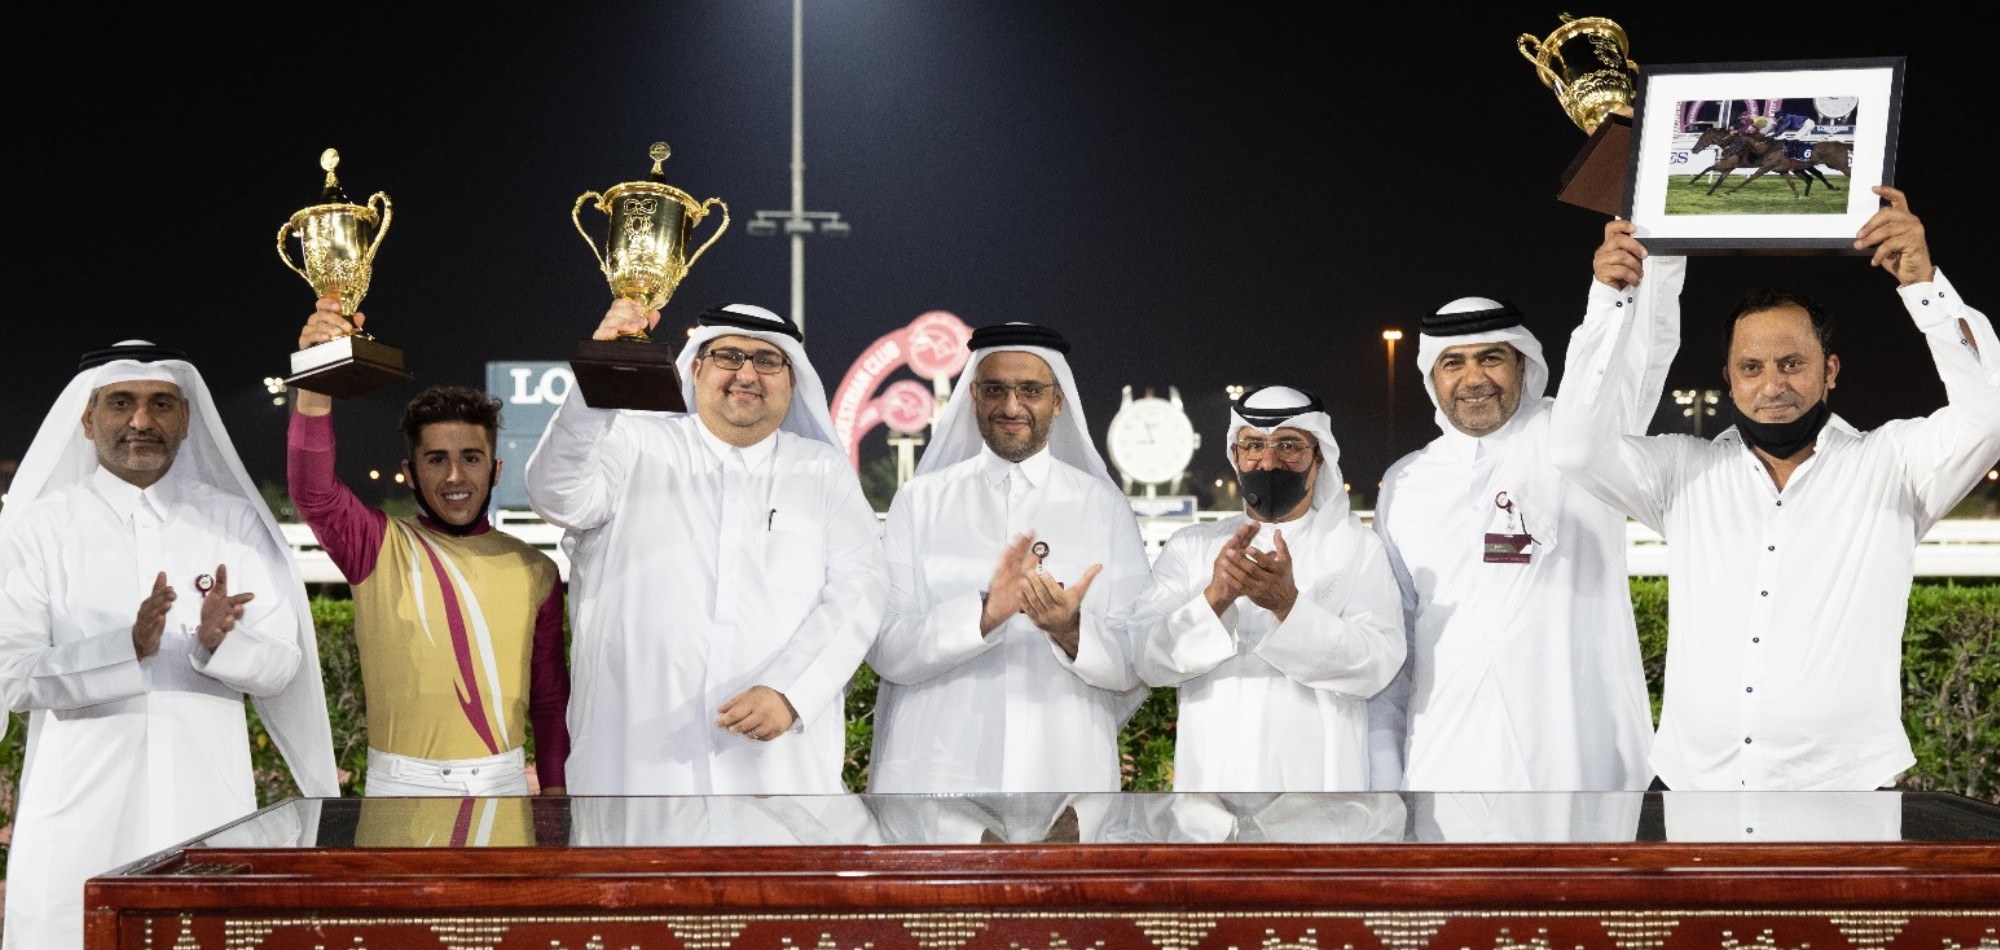 Abdulatif Hussain Al Emadi’s PAZEER lands another thrilling Group win